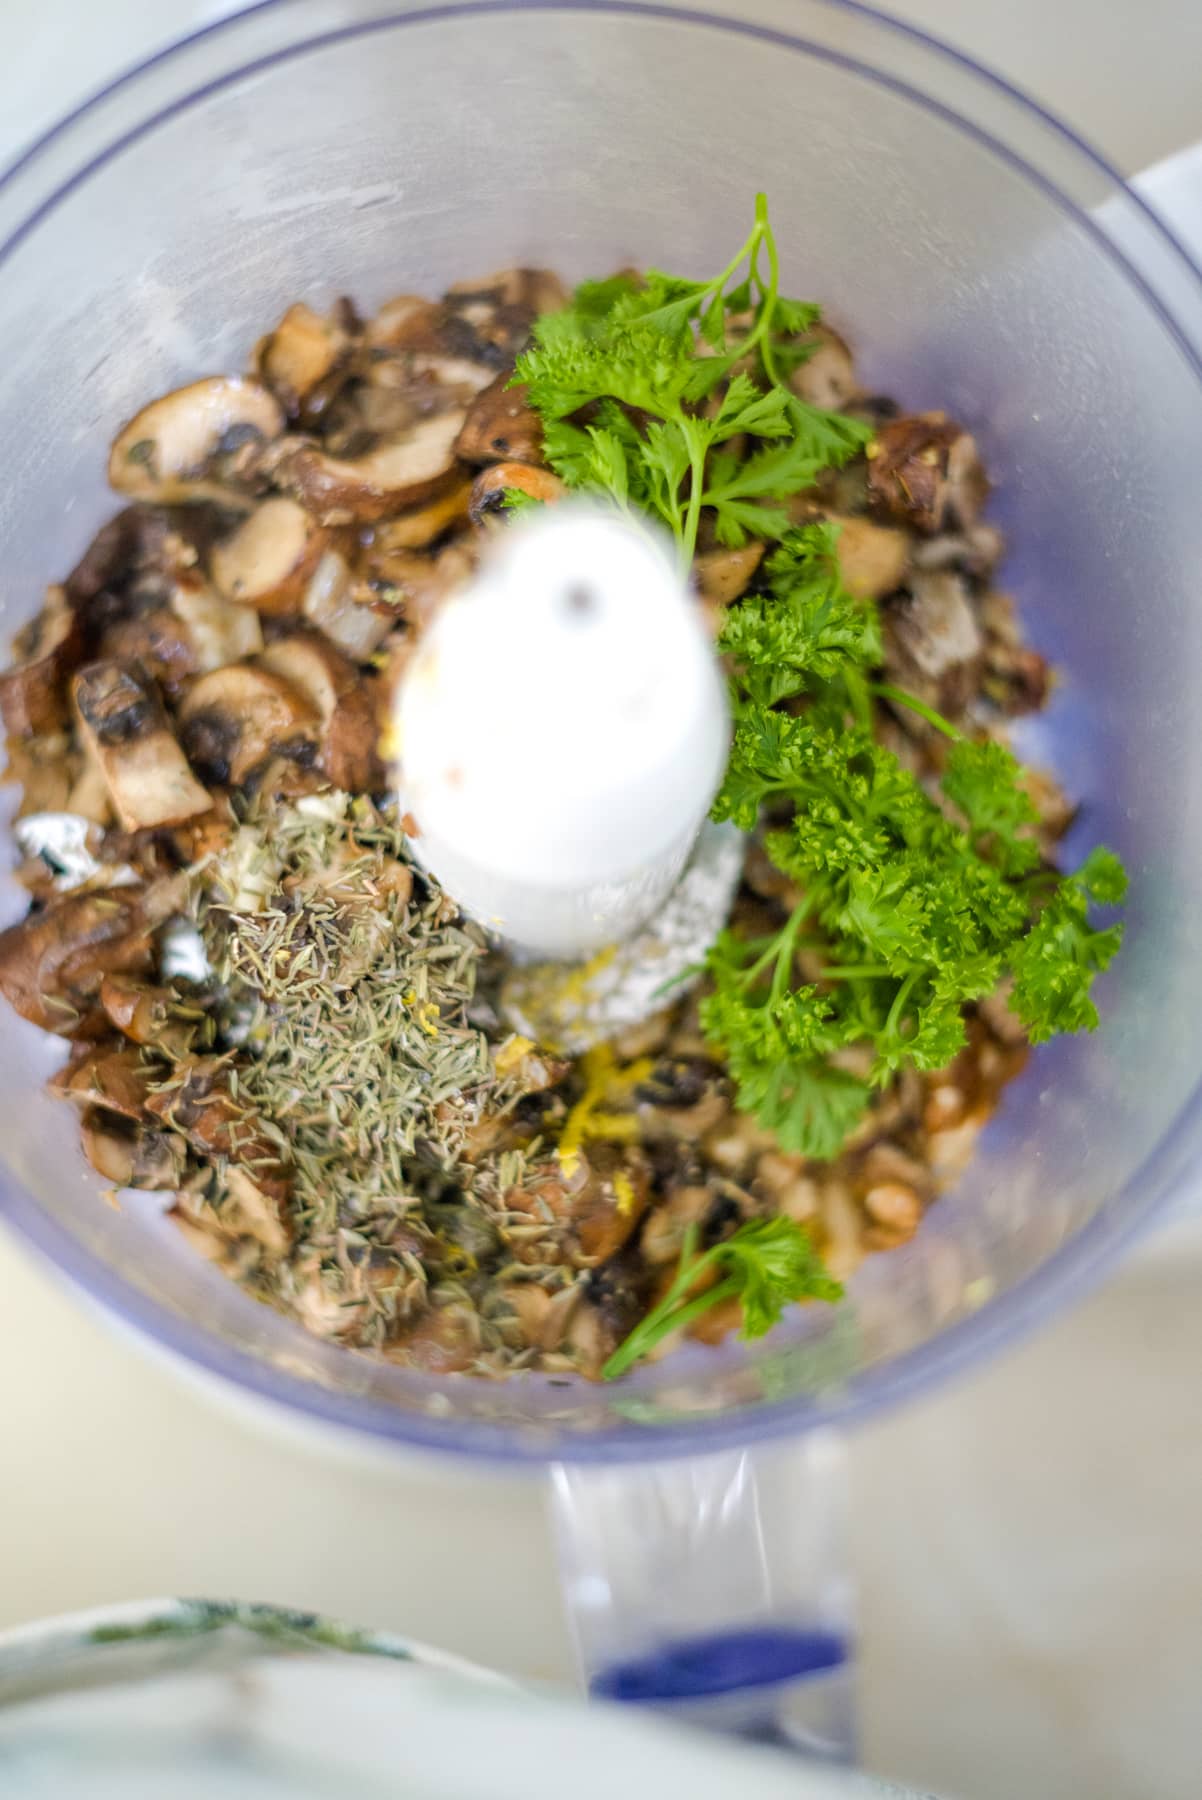 process nuts and mushrooms